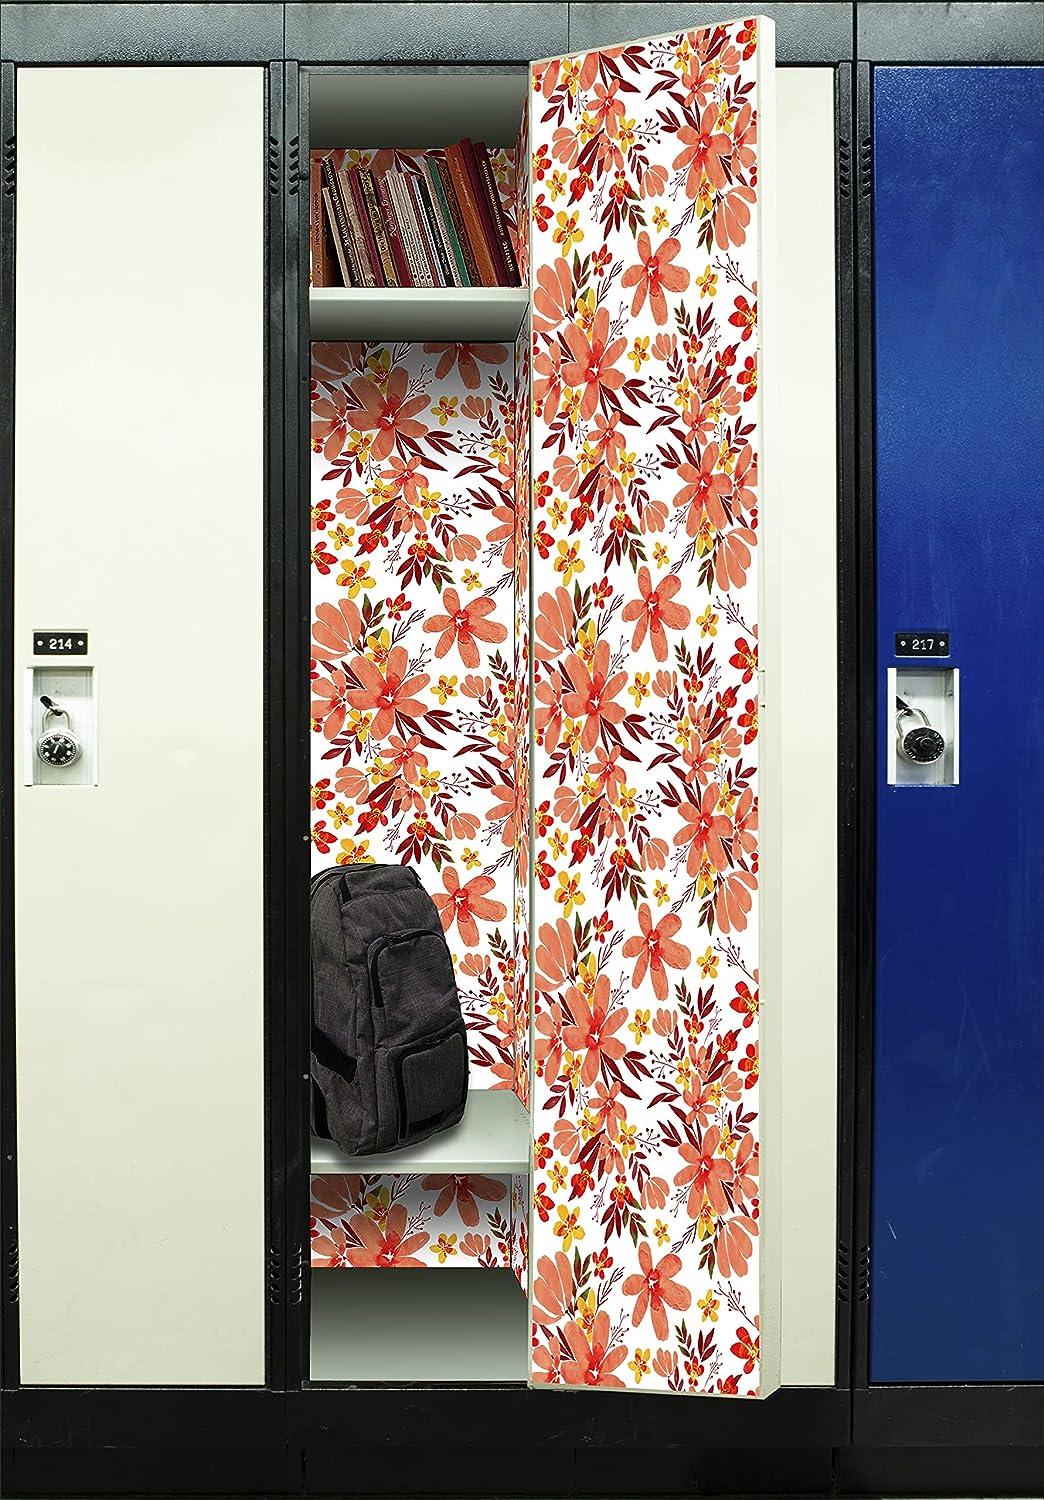 PELICAN INDUSTRIAL Wallpaper - Magnetic School Locker Wallpaper (Full Sheet Magnetic) - Flowers - Pack of 3 Sheets - vr26